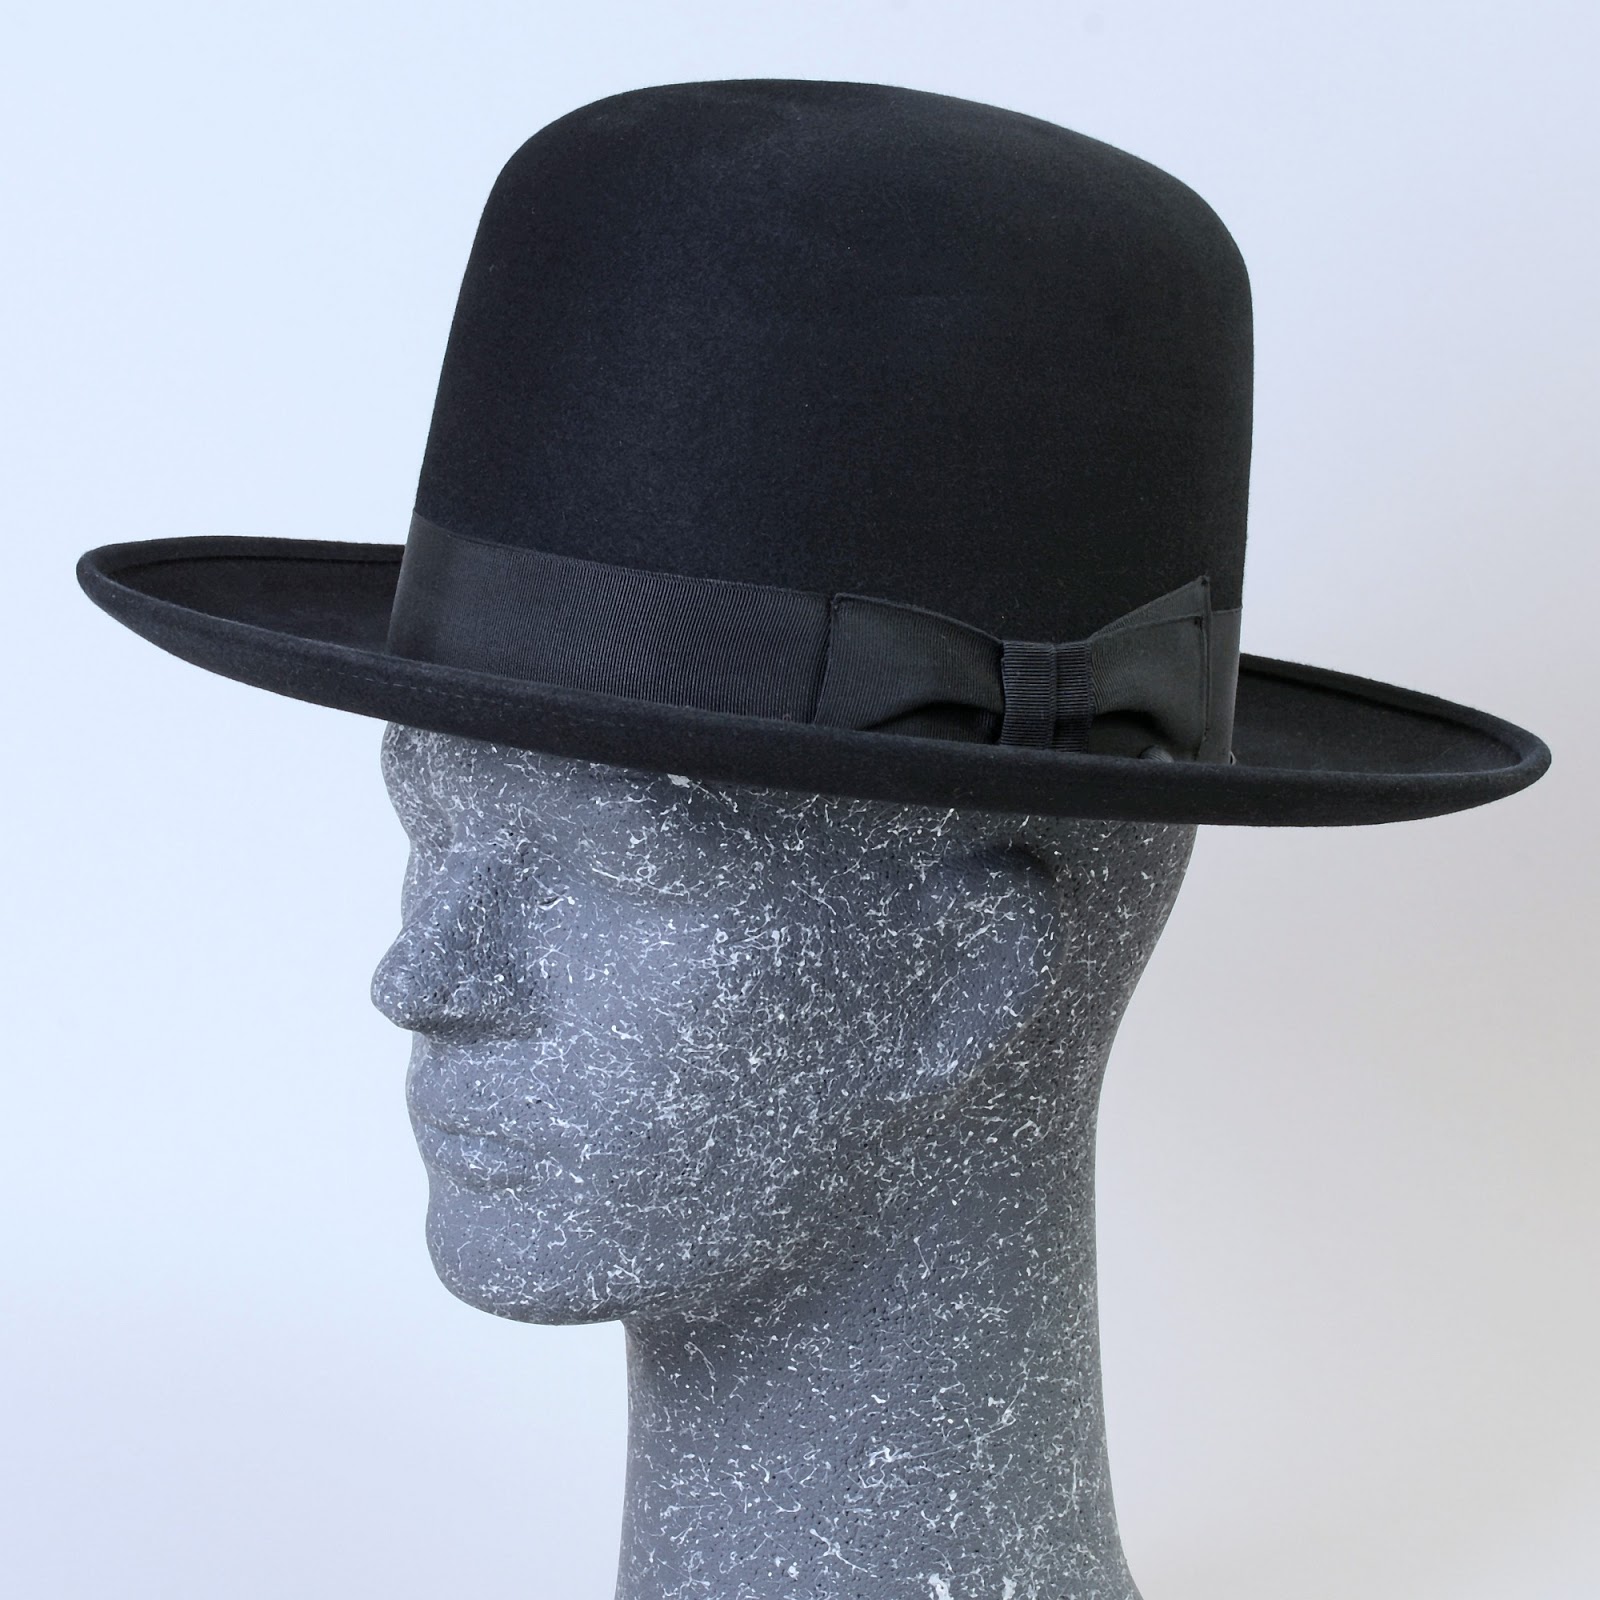 The Philippi Collection: Hats from Industrias Sombrereras Españolas